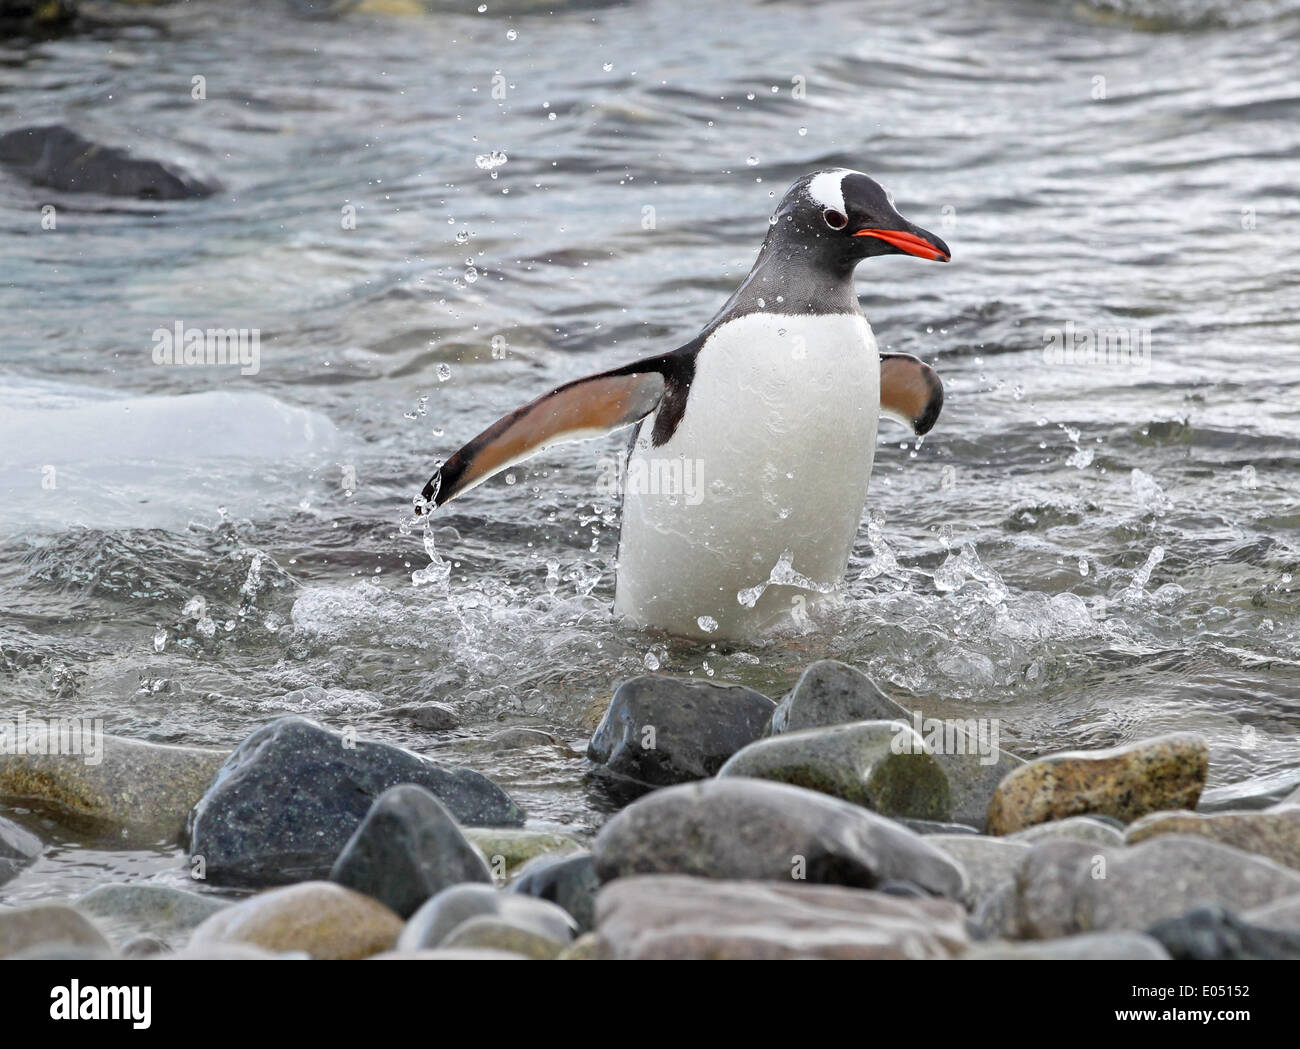 Pinguino Gentoo emergenti dall'acqua, Penisola Antartica, Antartide Foto Stock